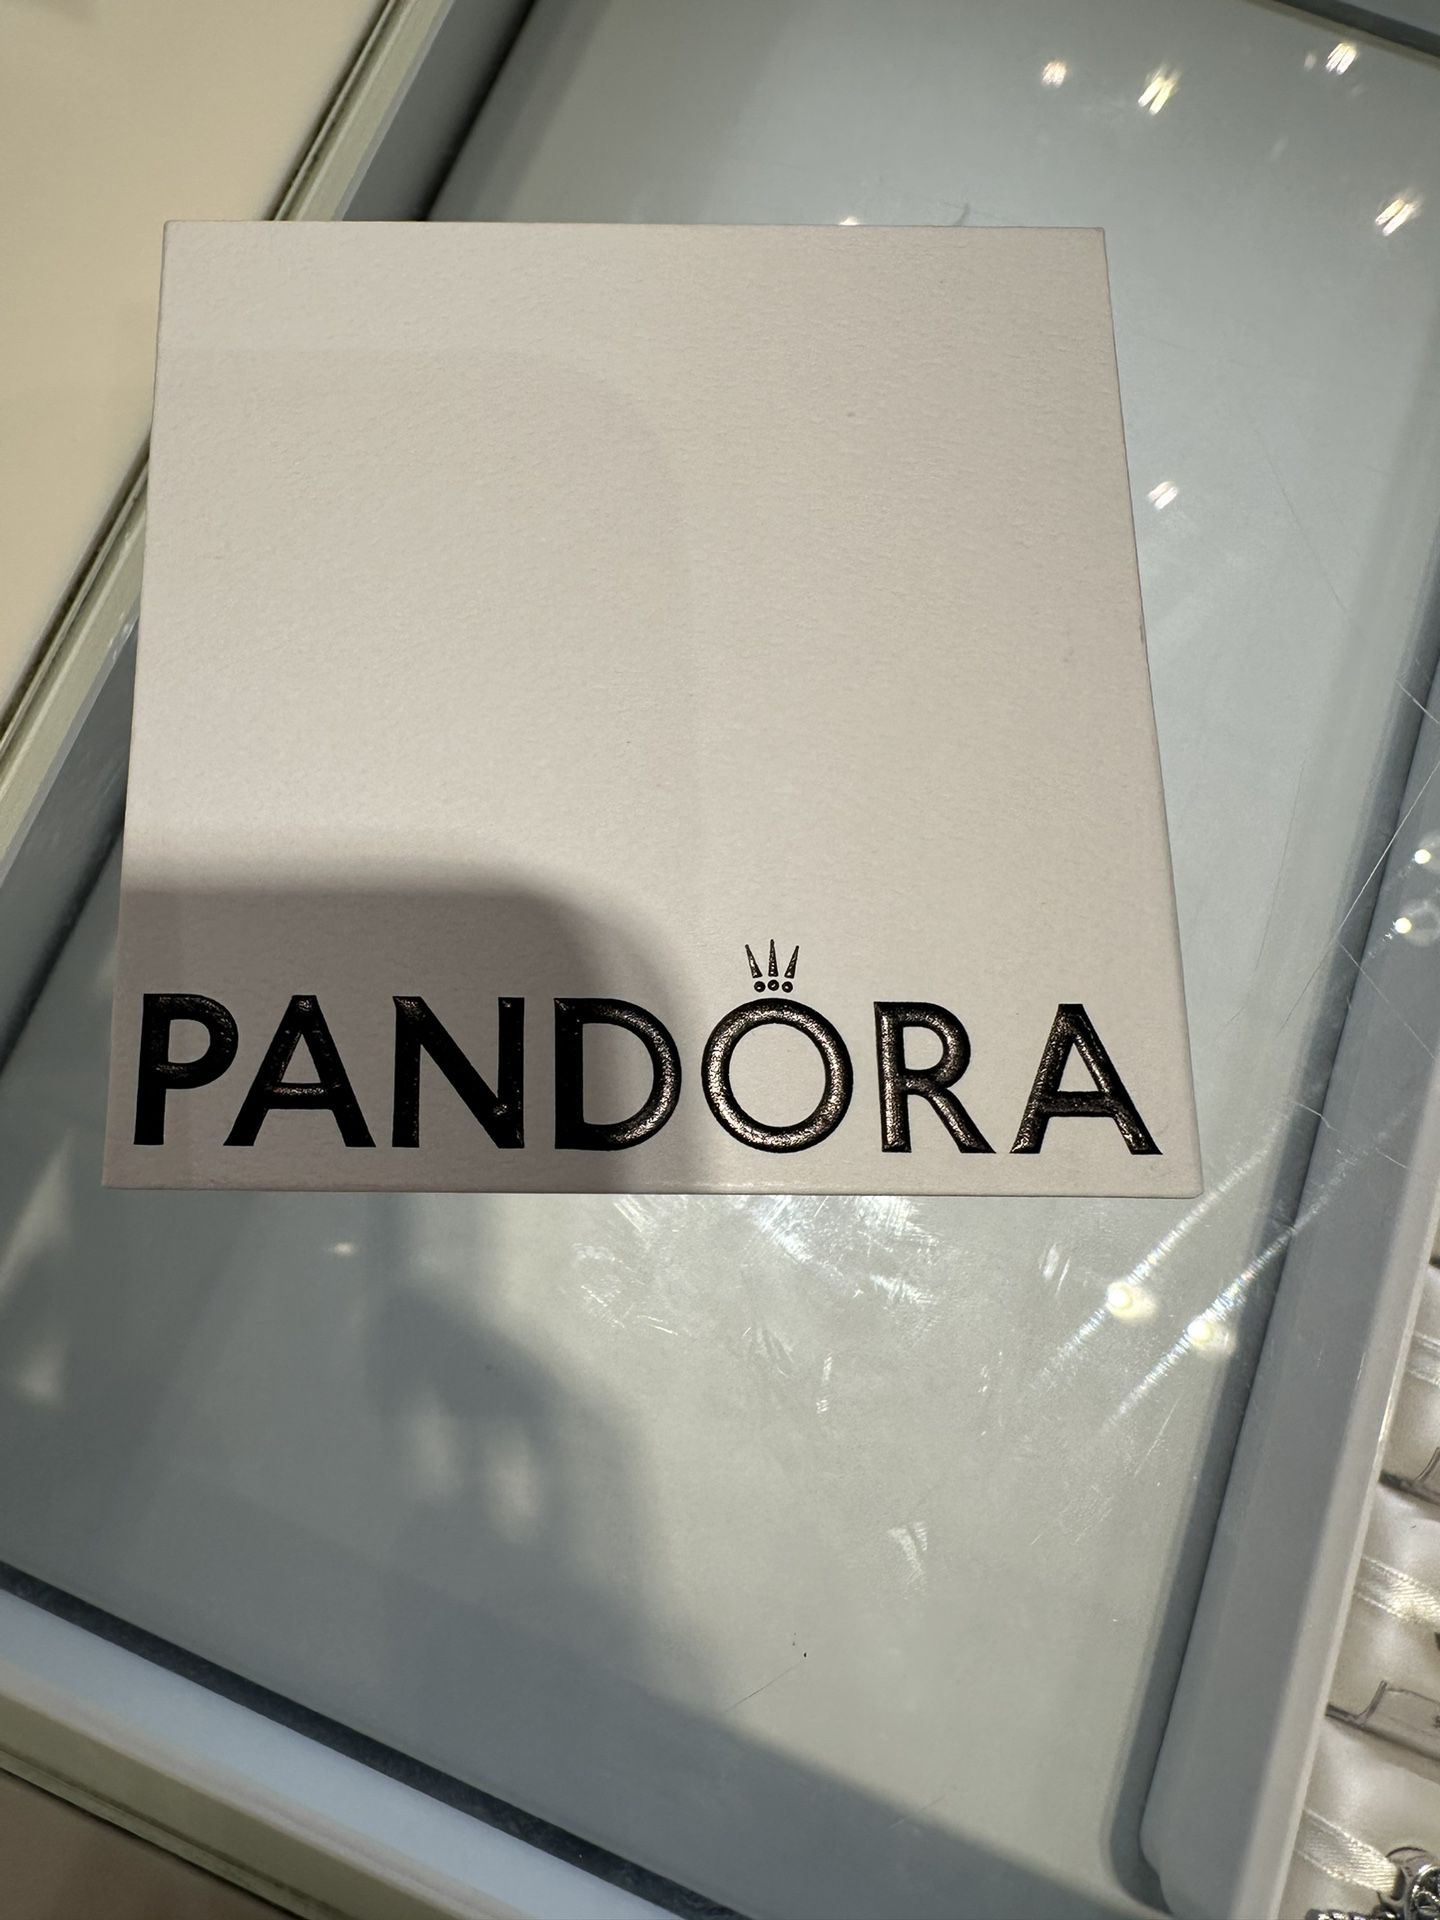 Pandora Bangle Bracelet 